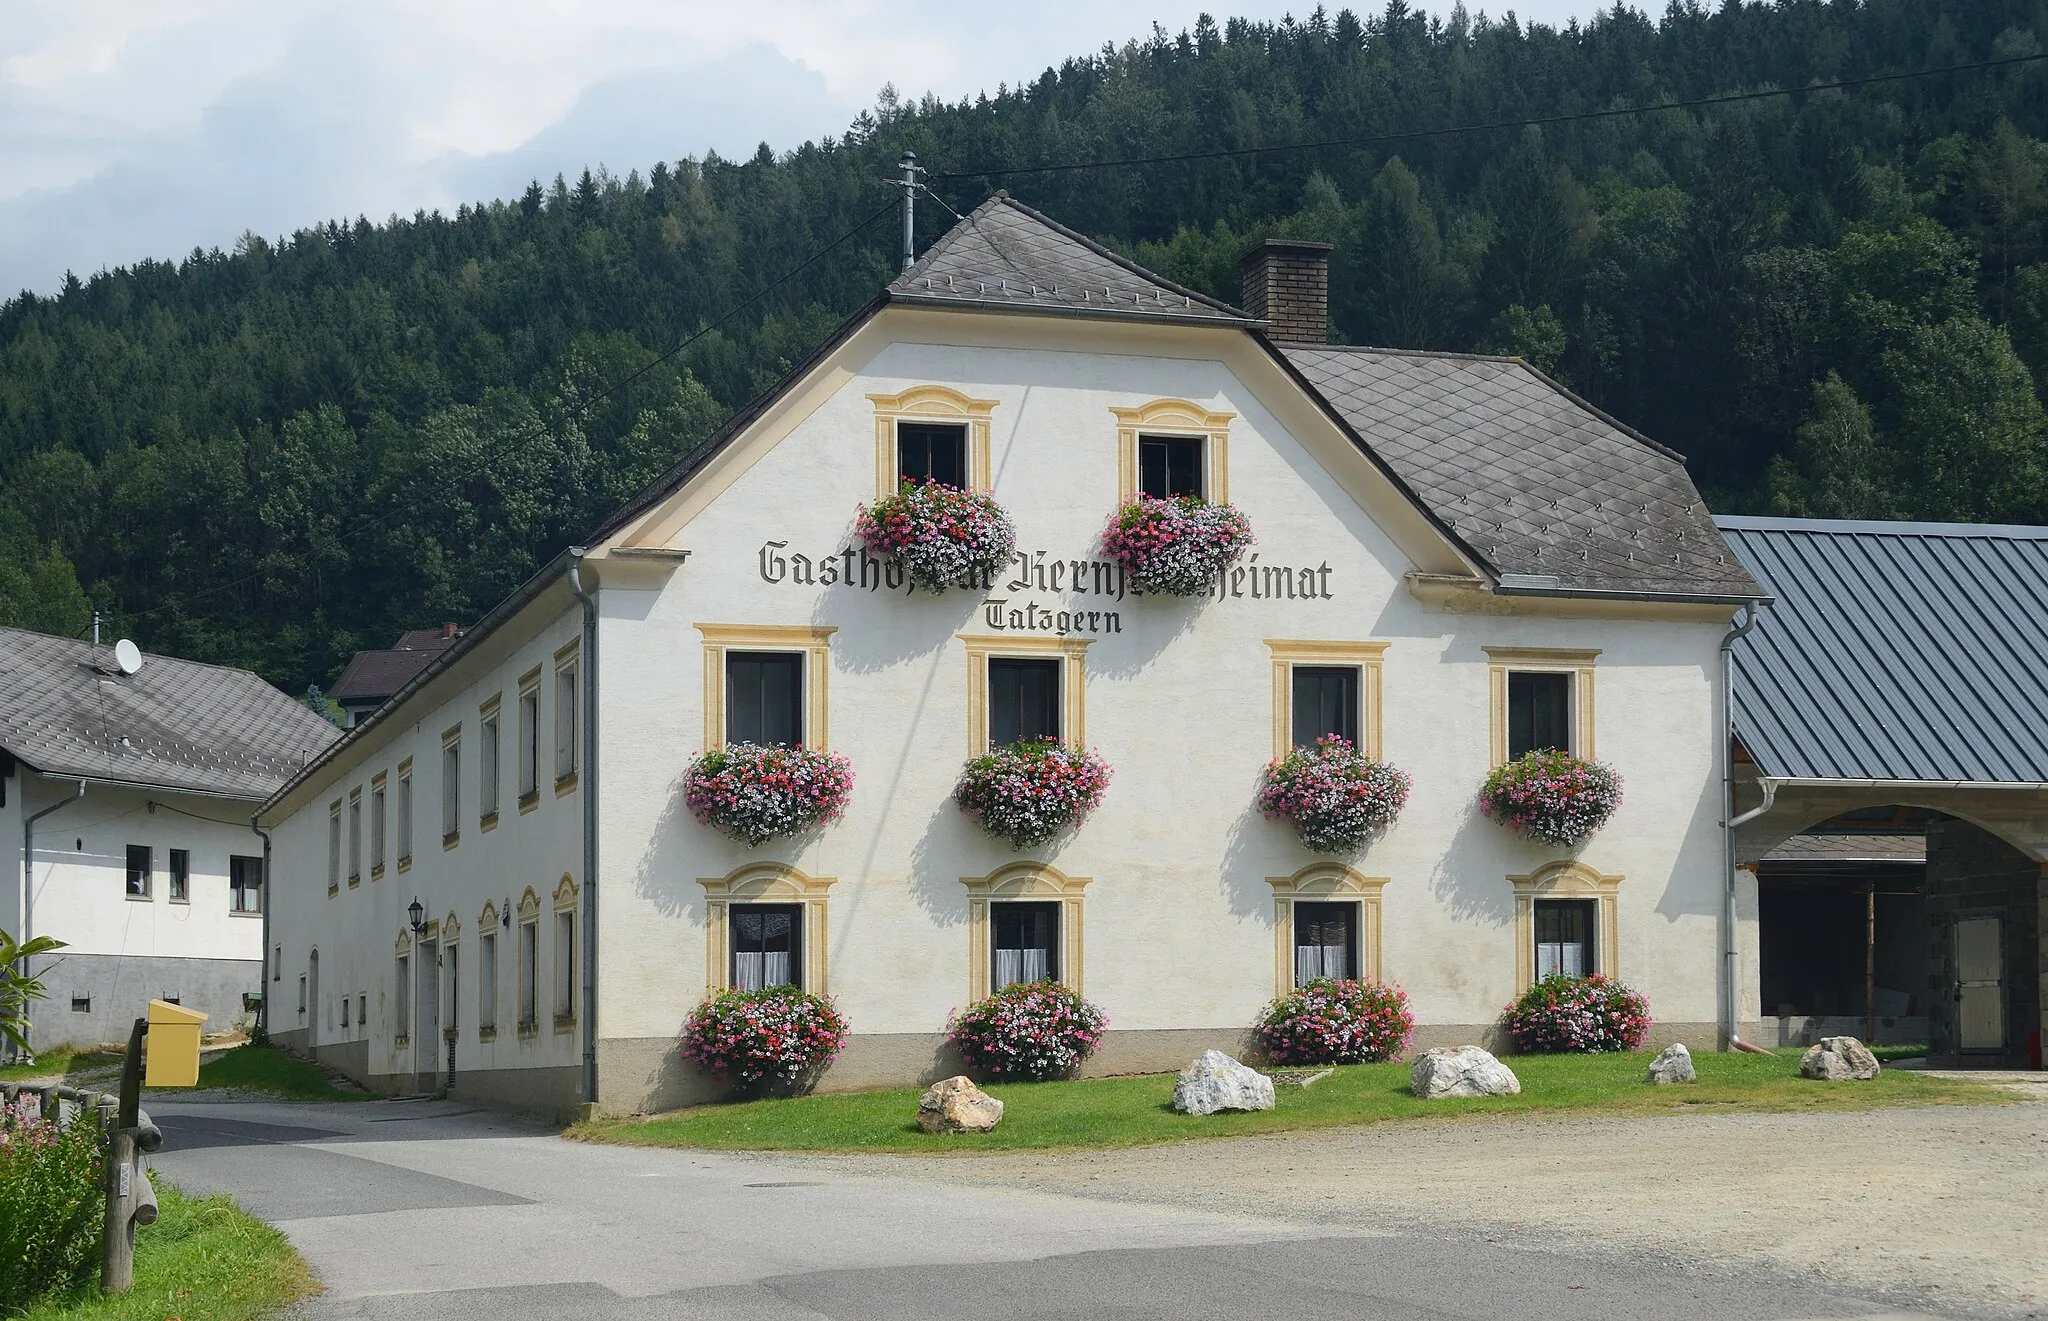 Photo showing: Gasthof zur Kernstockheimat (inn named after Ottokar Kernstock), Köppel, municipality of Sankt Lorenzen am Wechsel, Styria.